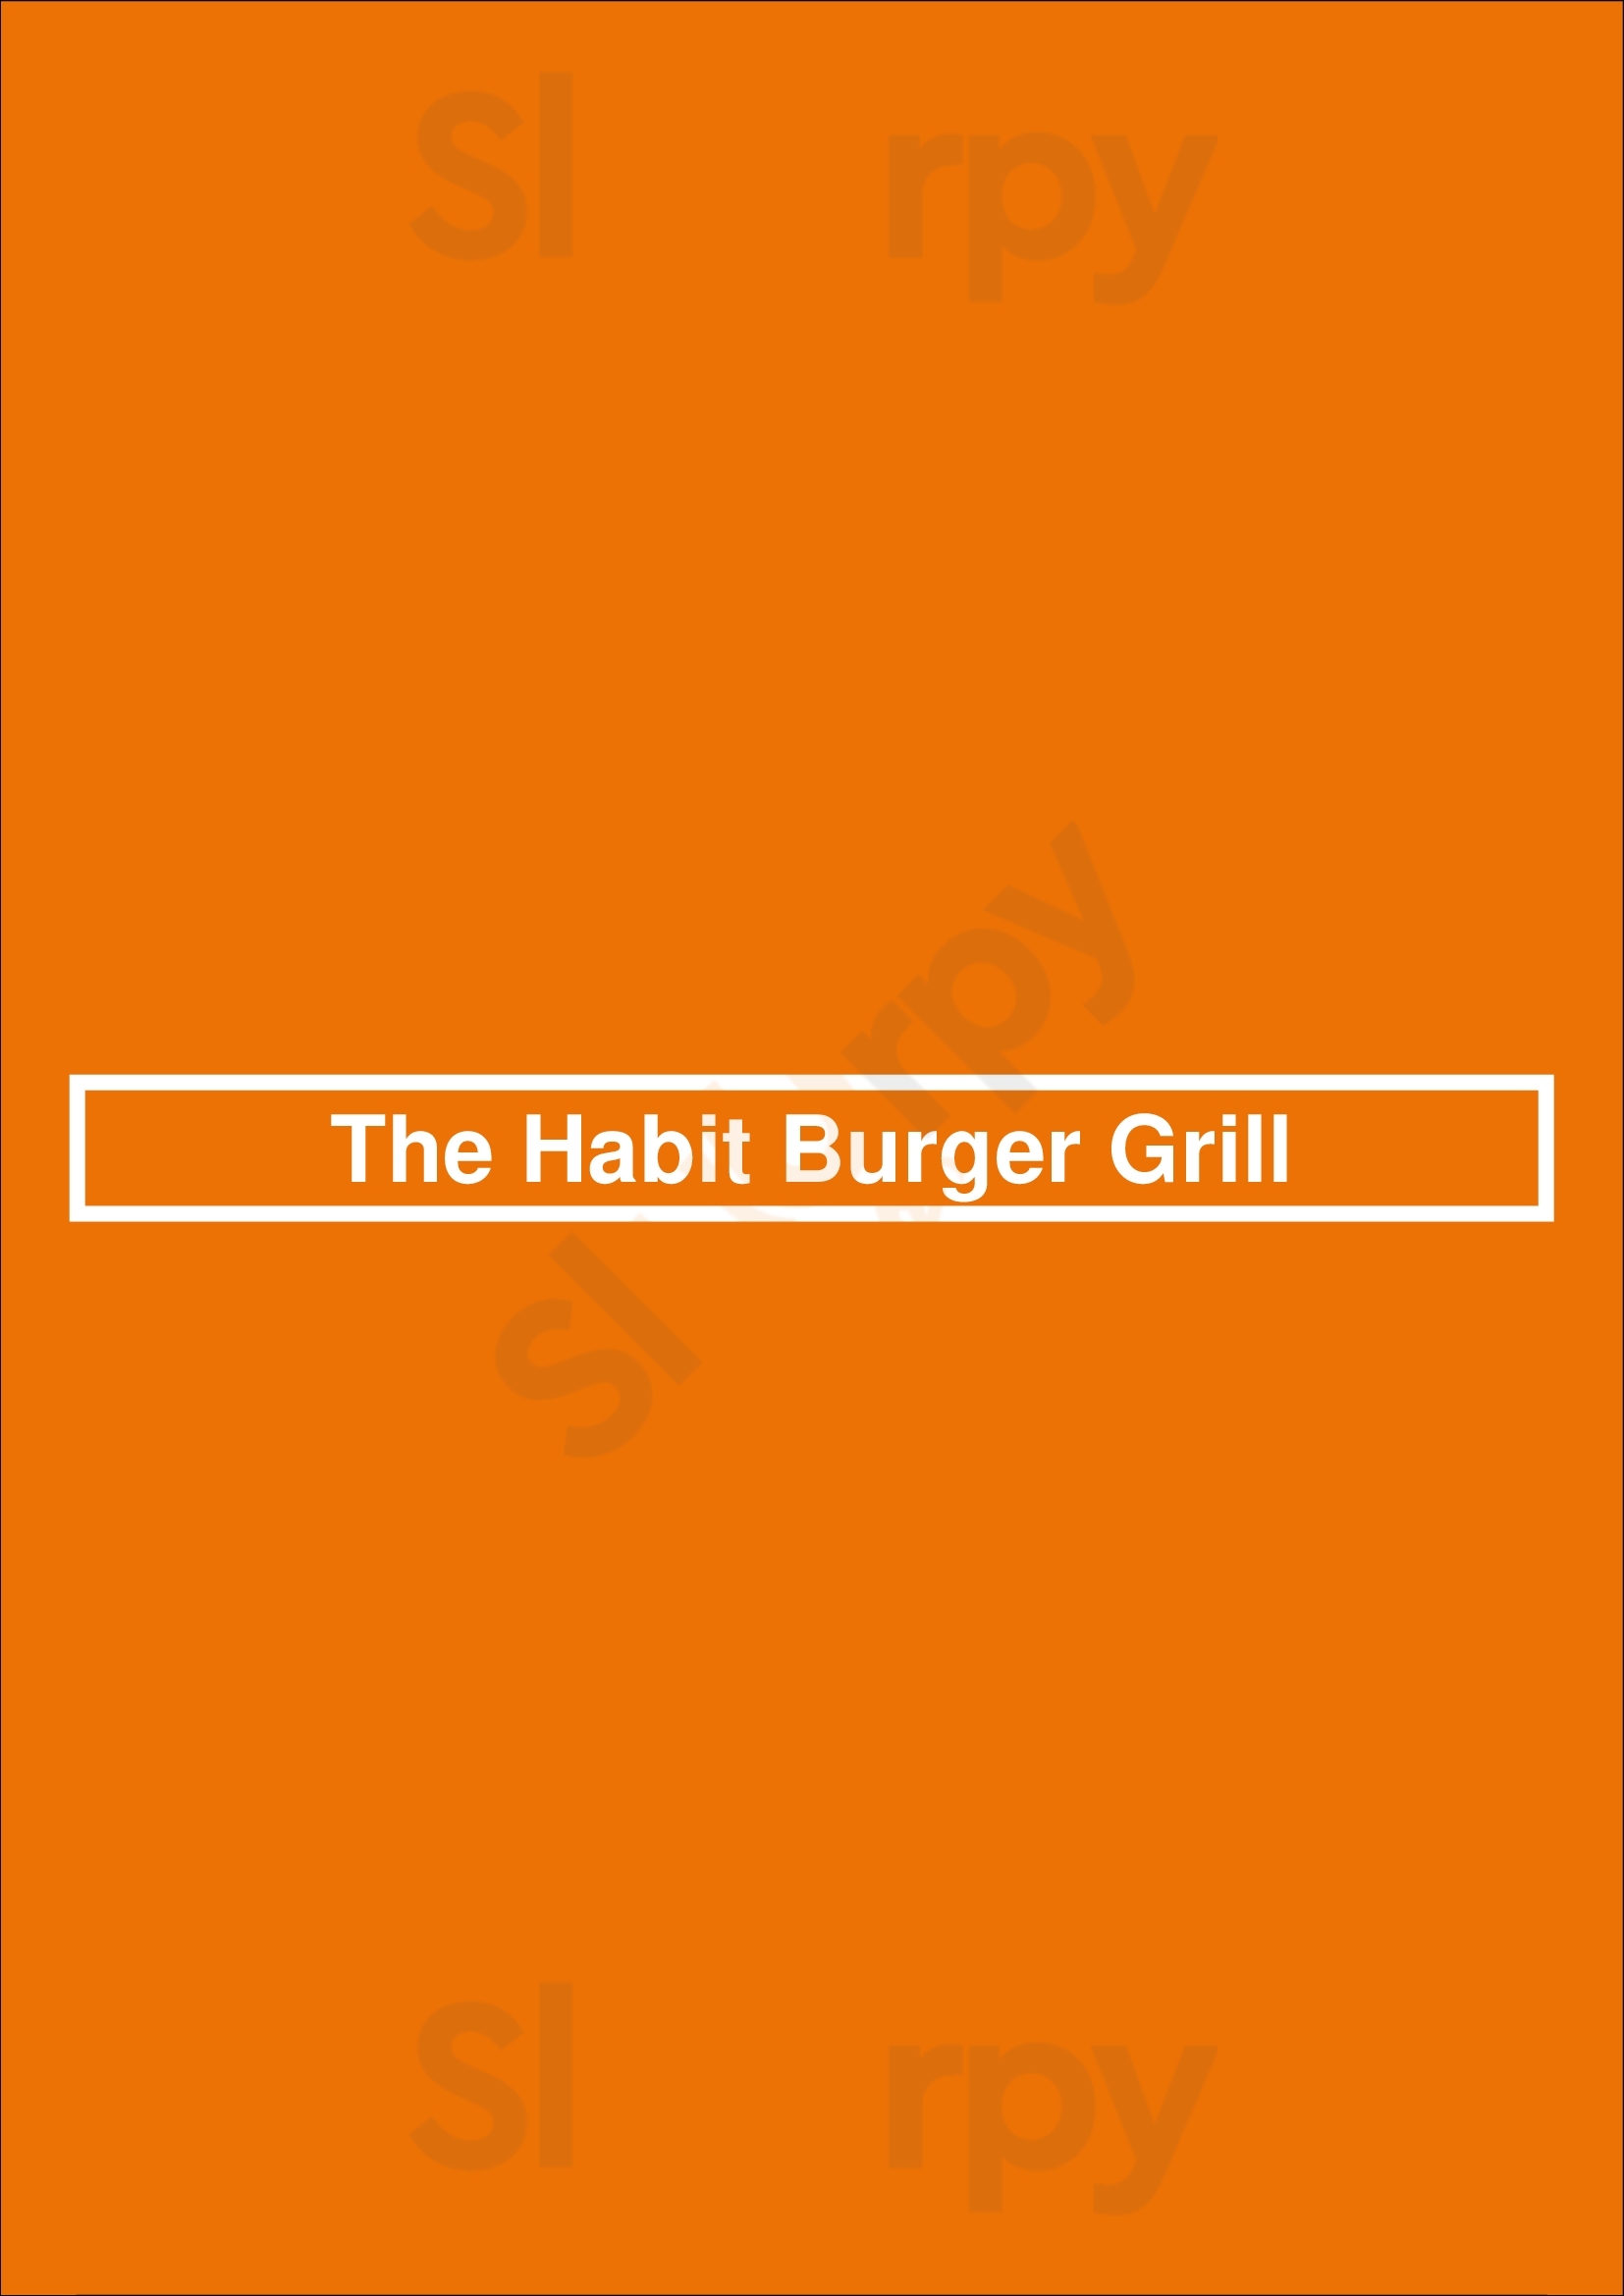 The Habit Burger Grill Redwood City Menu - 1